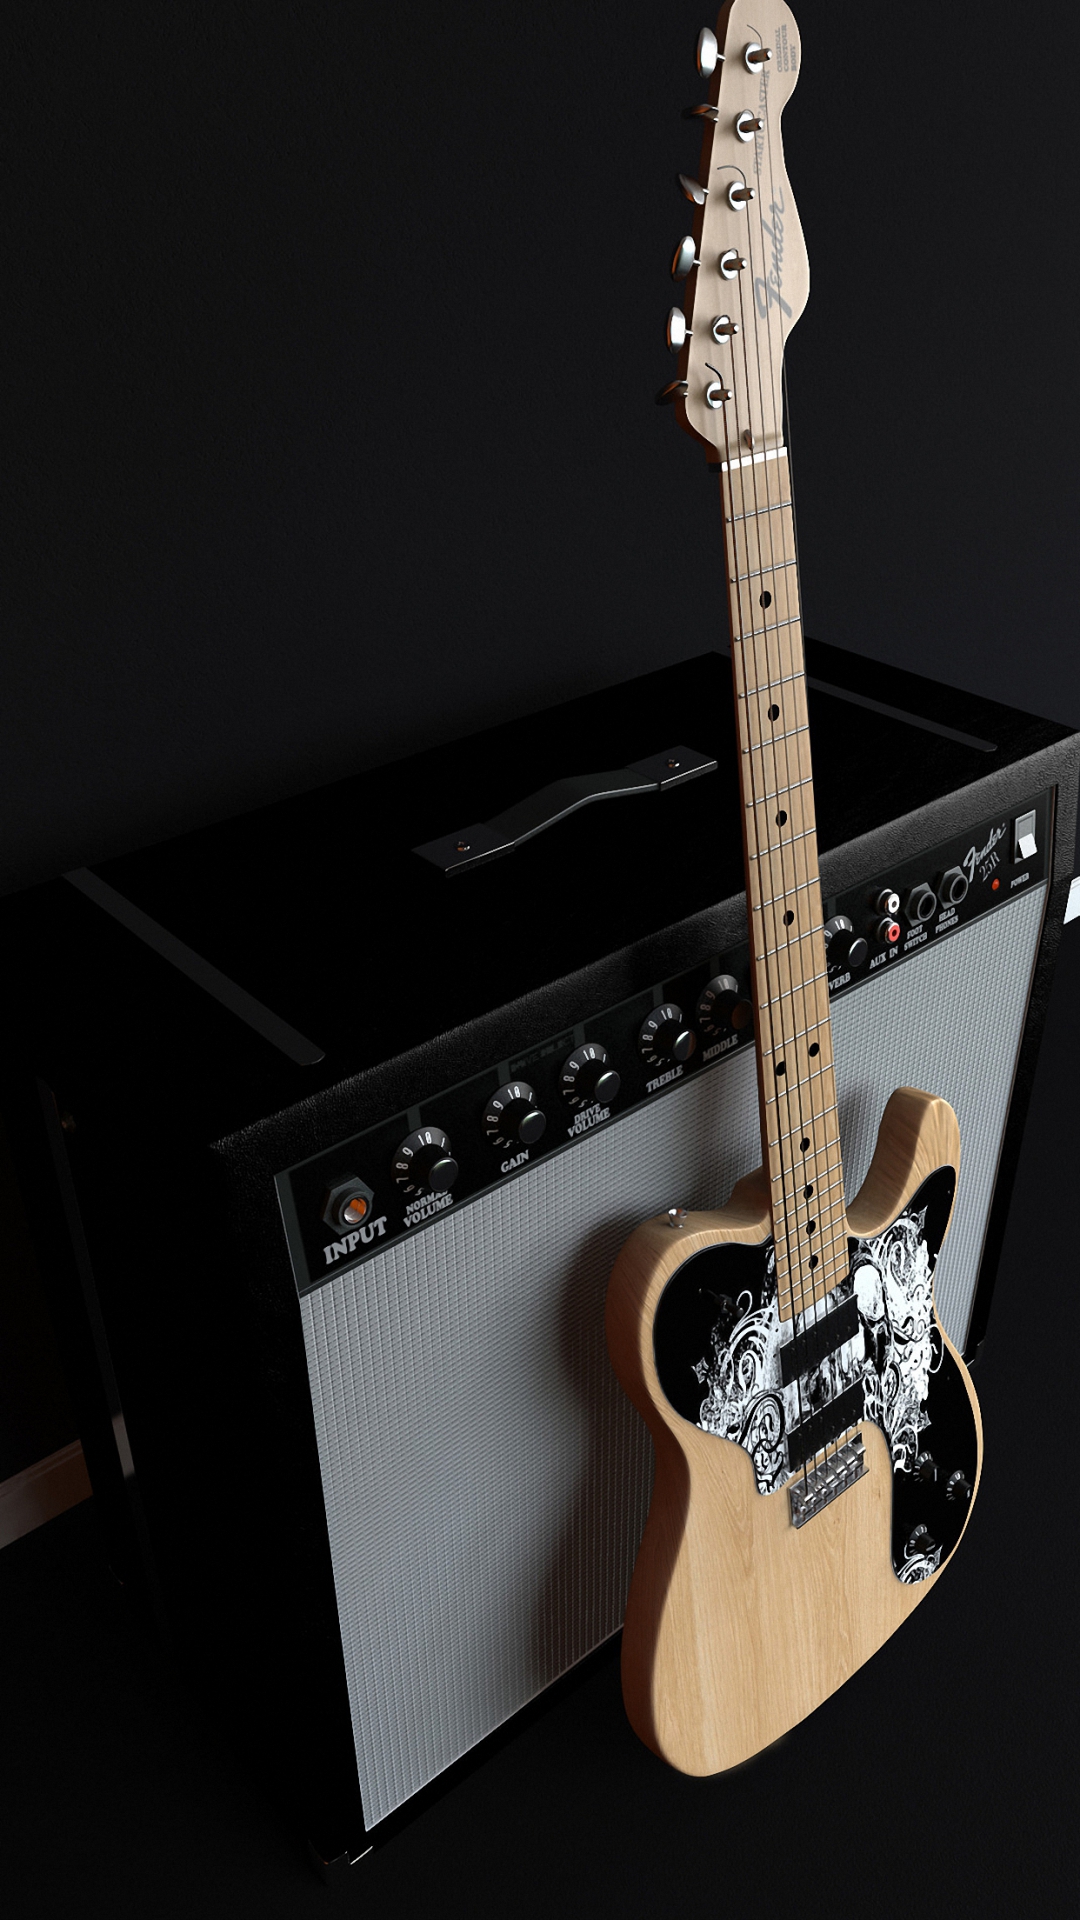 Fender Music Guitar Wallpaper For iPhone 6s Plus